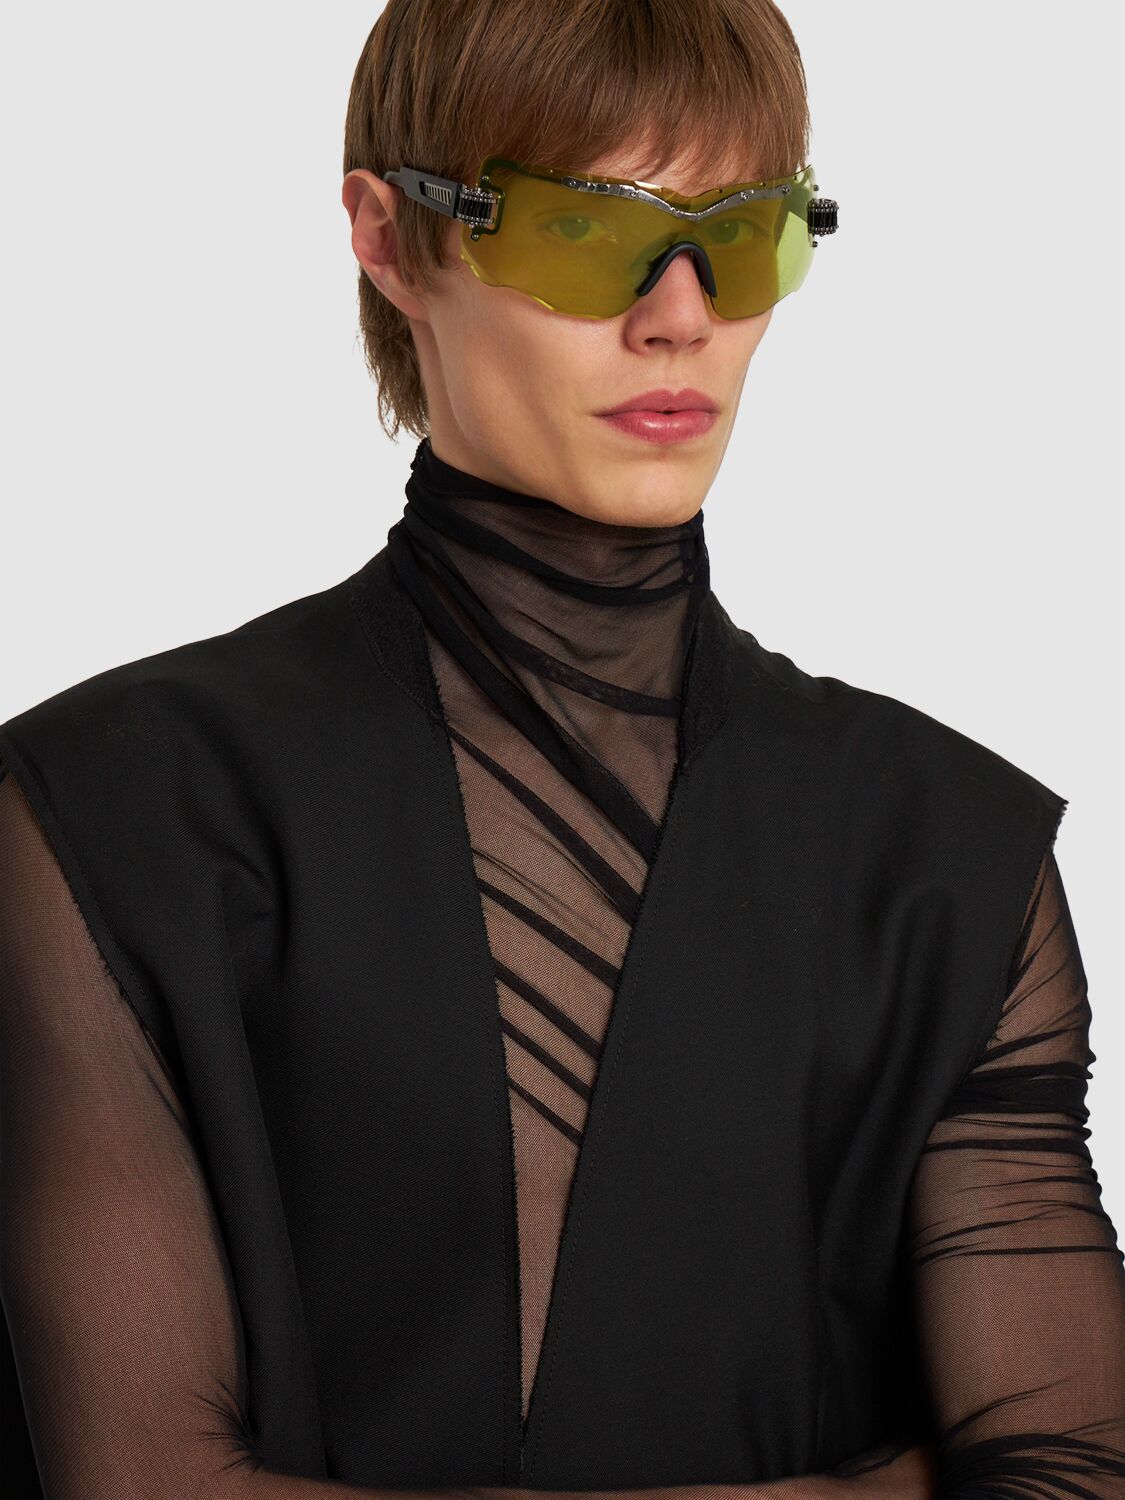 Shop Kuboraum Berlin E15 Mask Ruthenium Sunglasses In Green,black